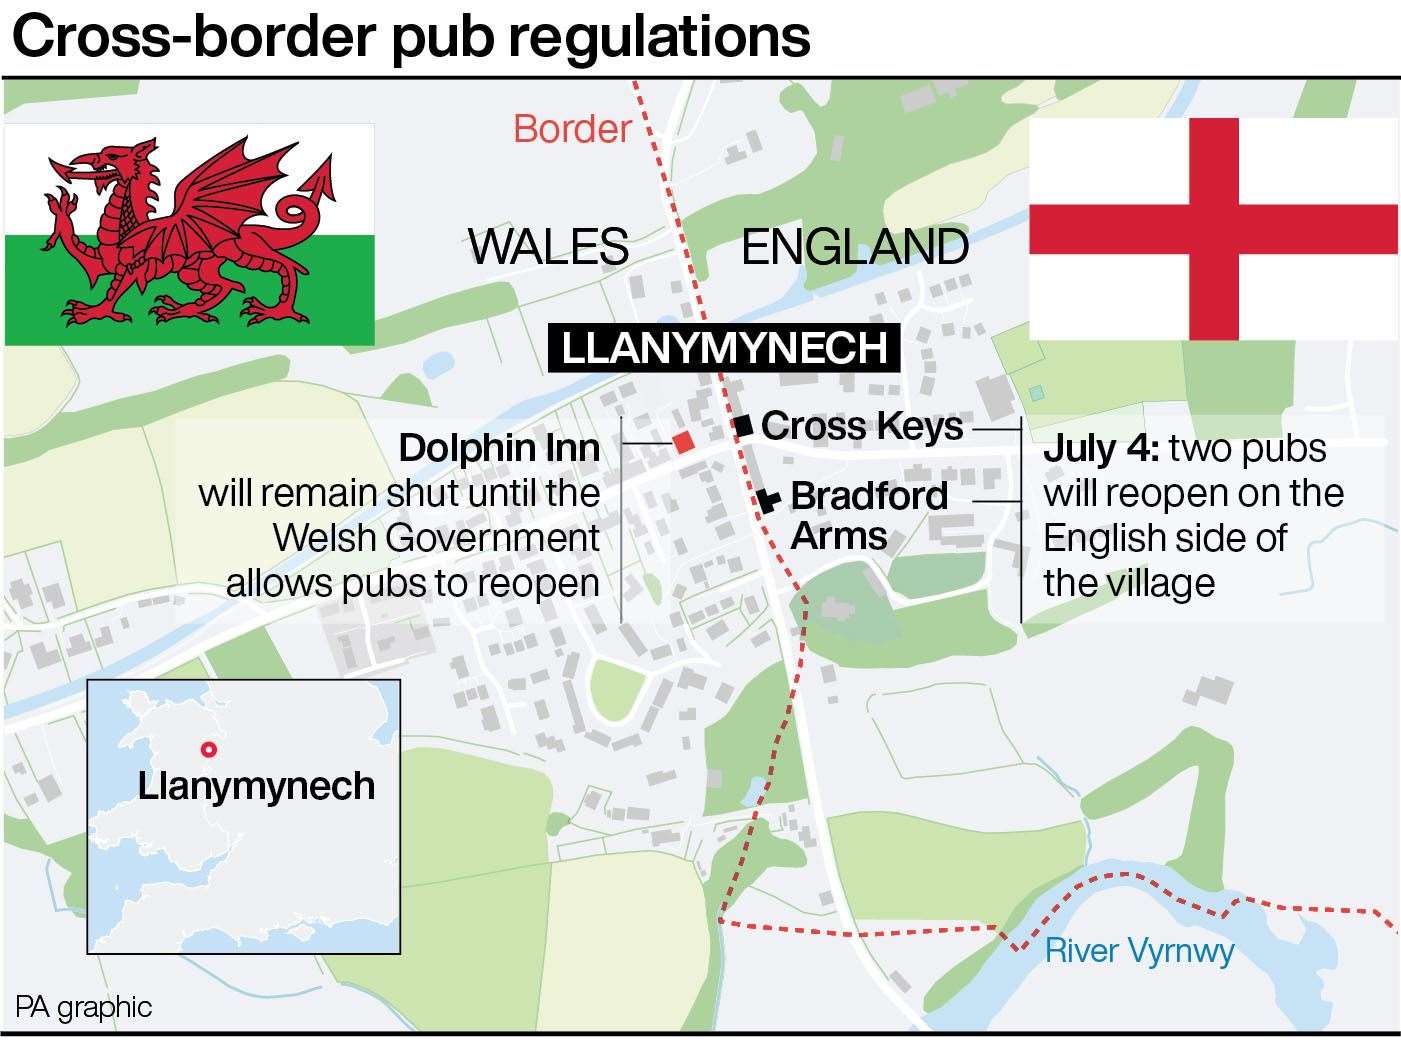 Cross-border pub regulations in Llanymynech (PA Graphics)